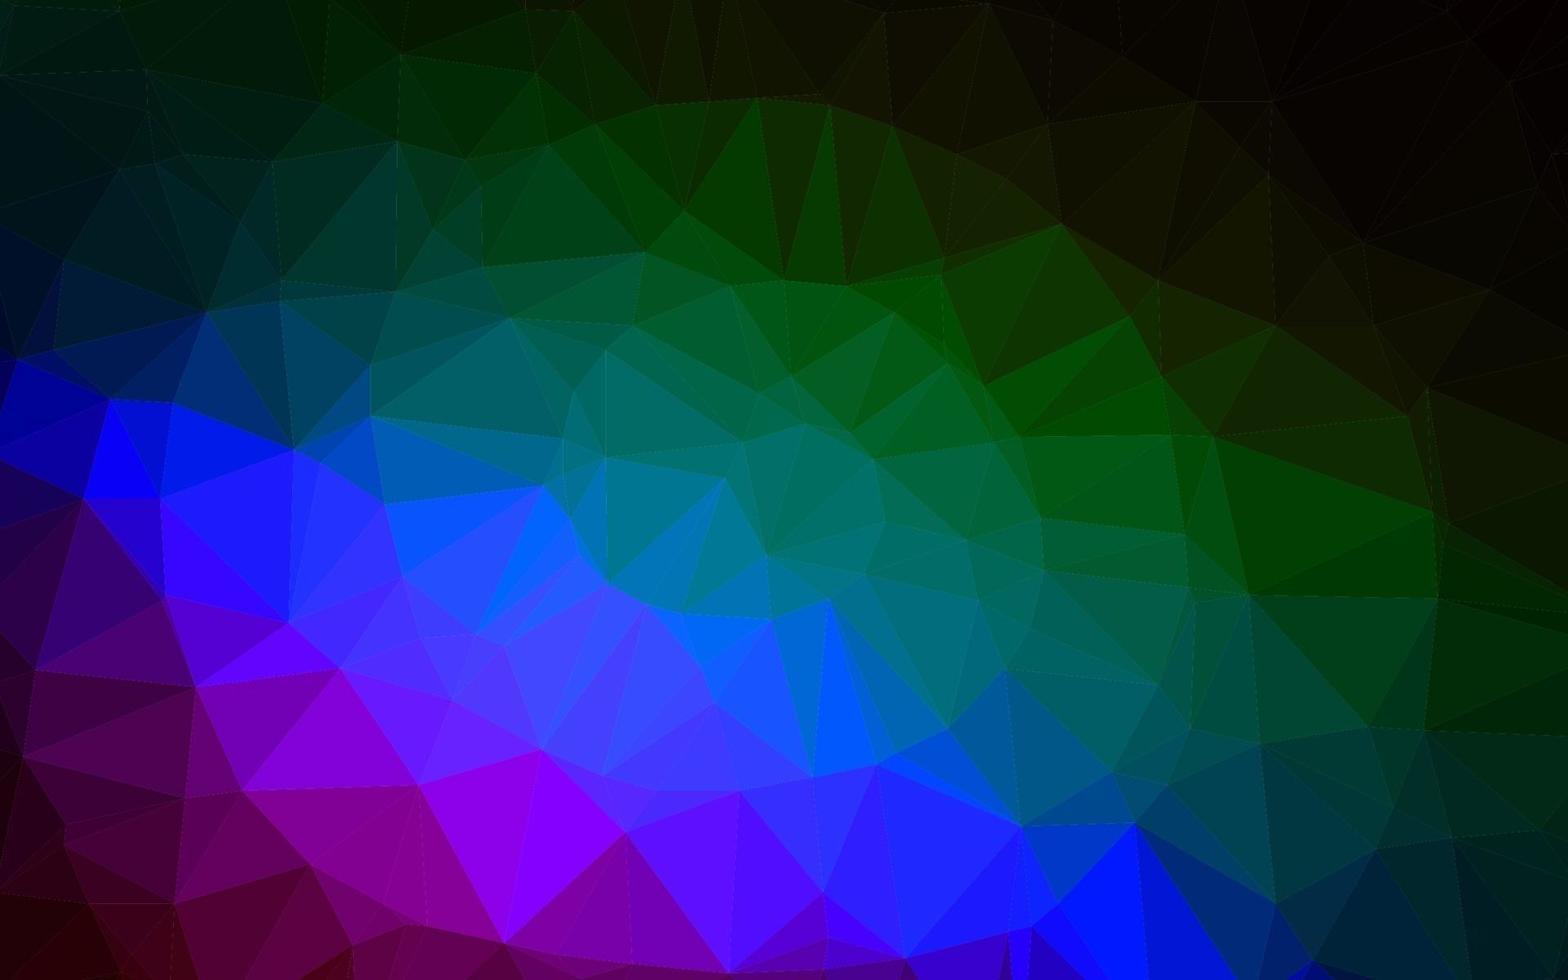 mörk flerfärgad, regnbåge vektor abstrakt polygonalt omslag.